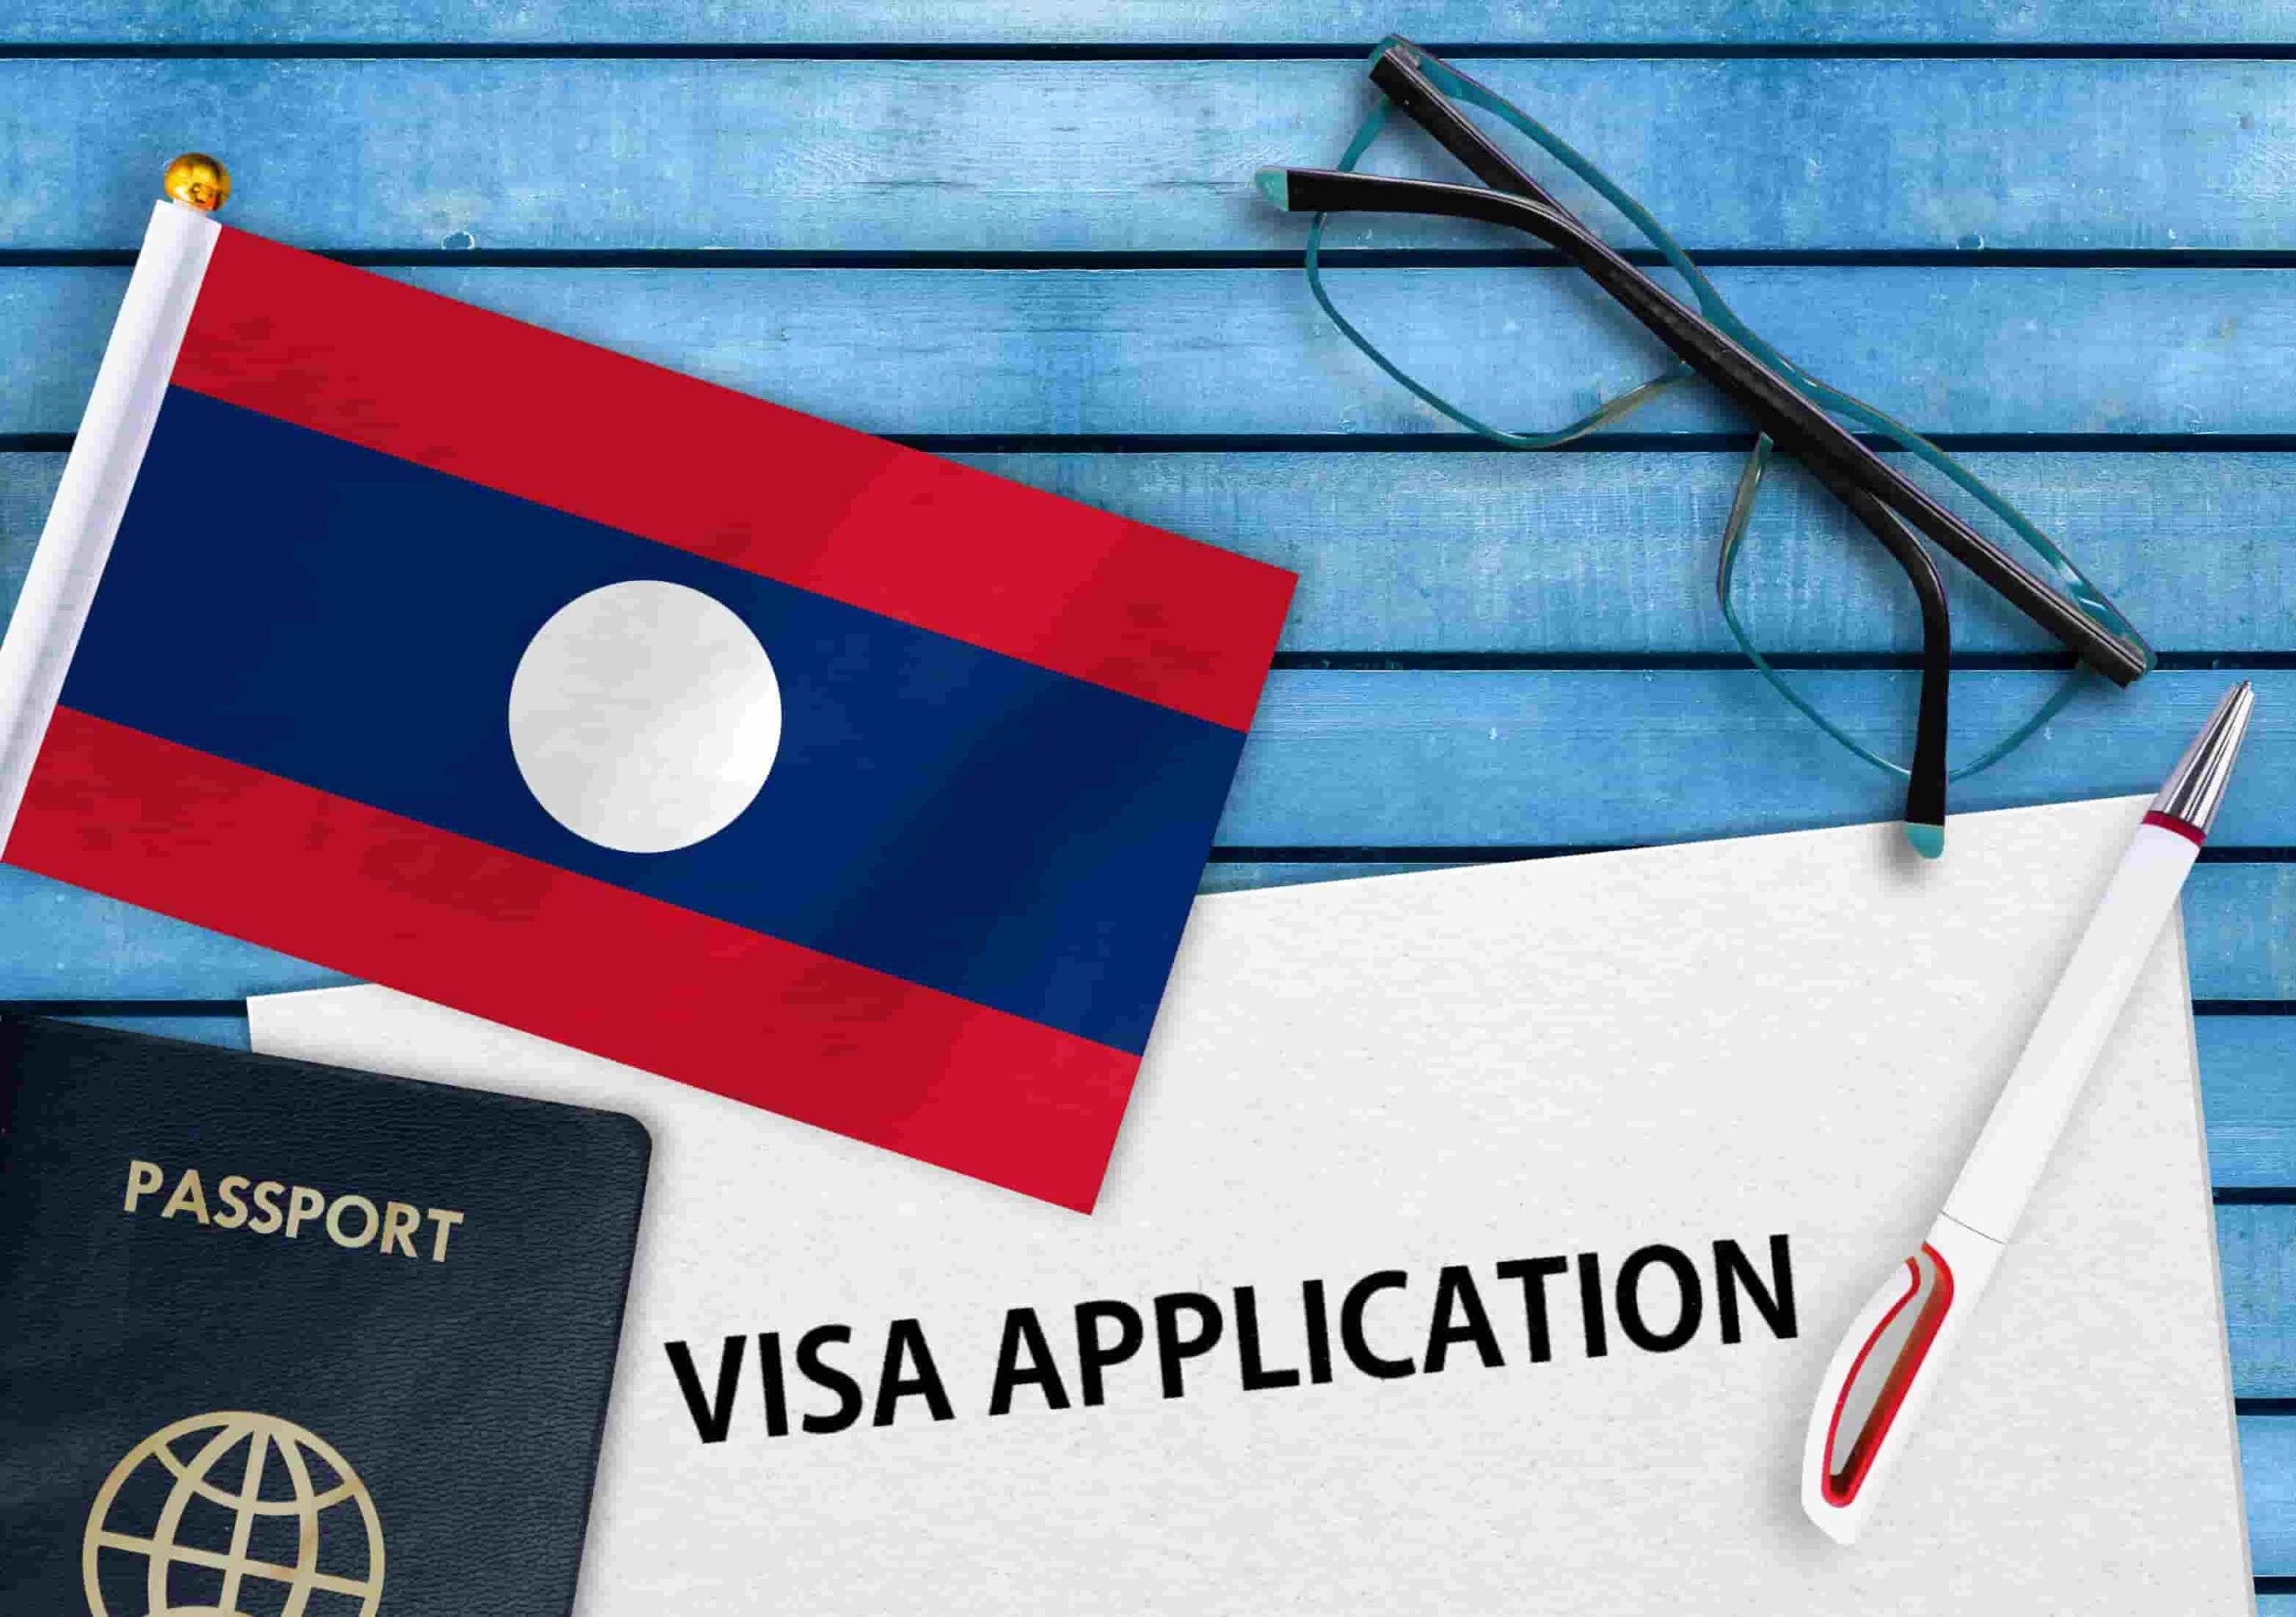 flag of Laos and visa application form